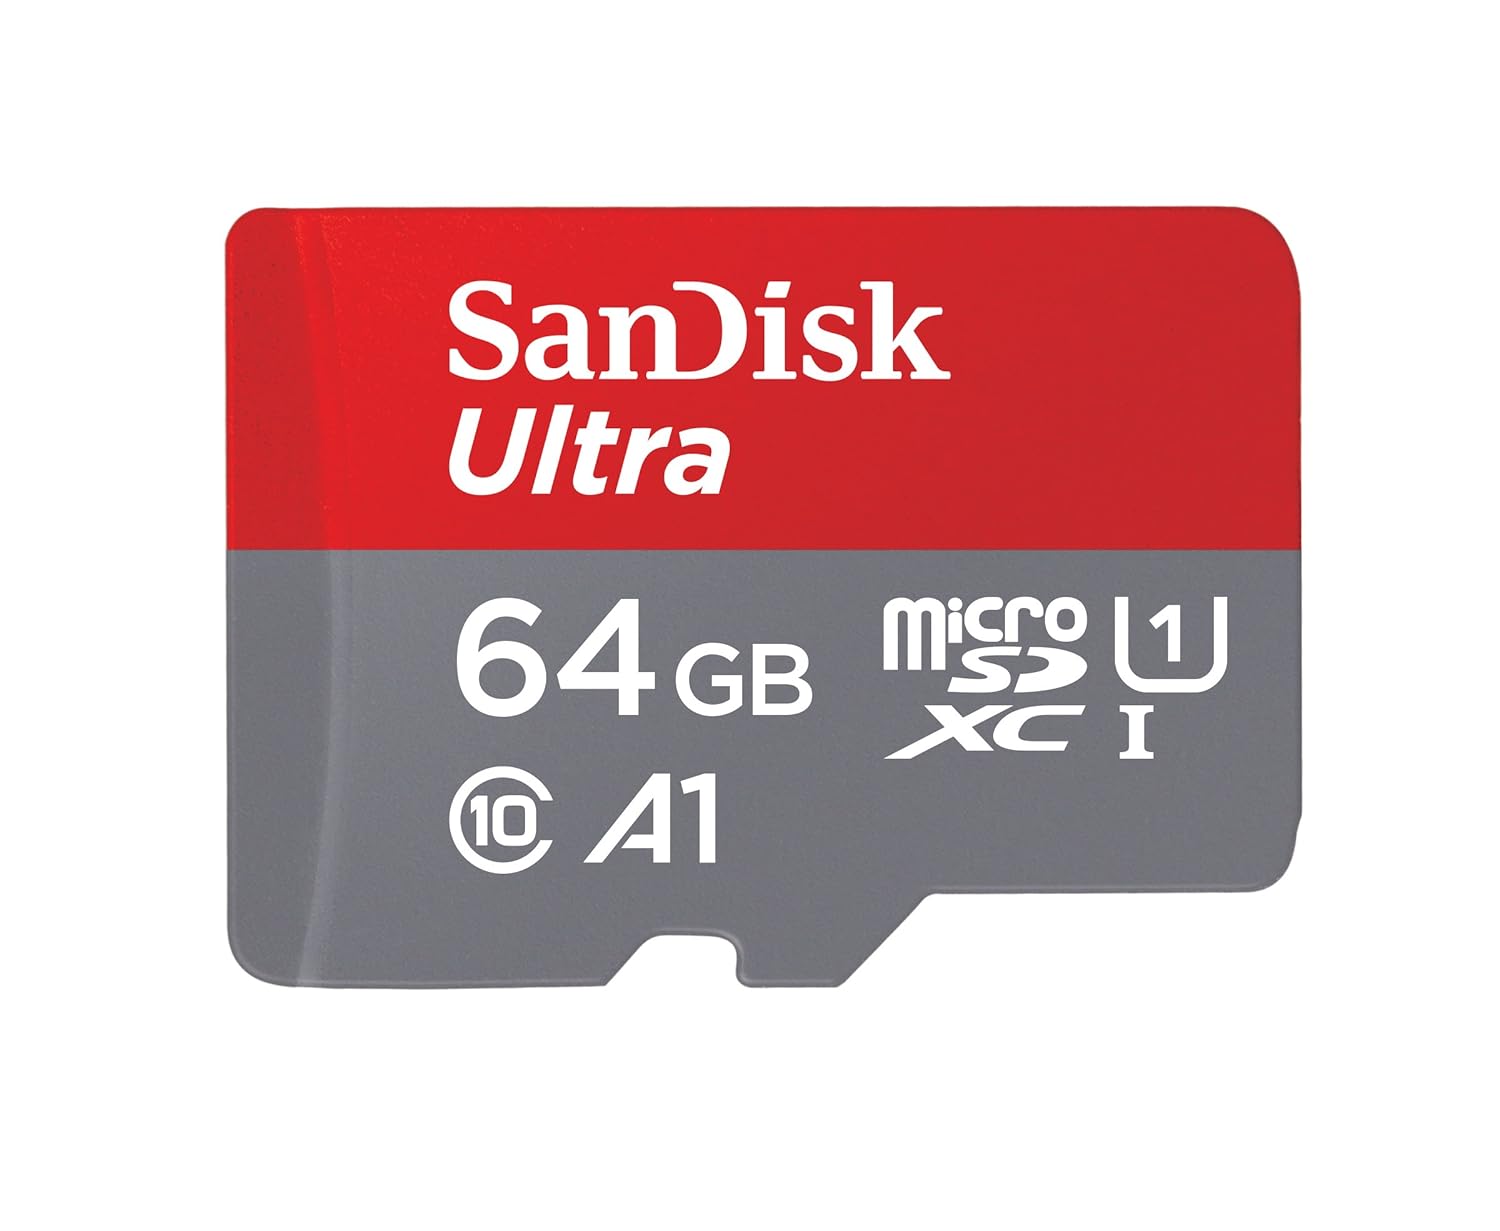 Sandisk A1 Mirco SDHC Class 10 (140 MBPS) 64 GB